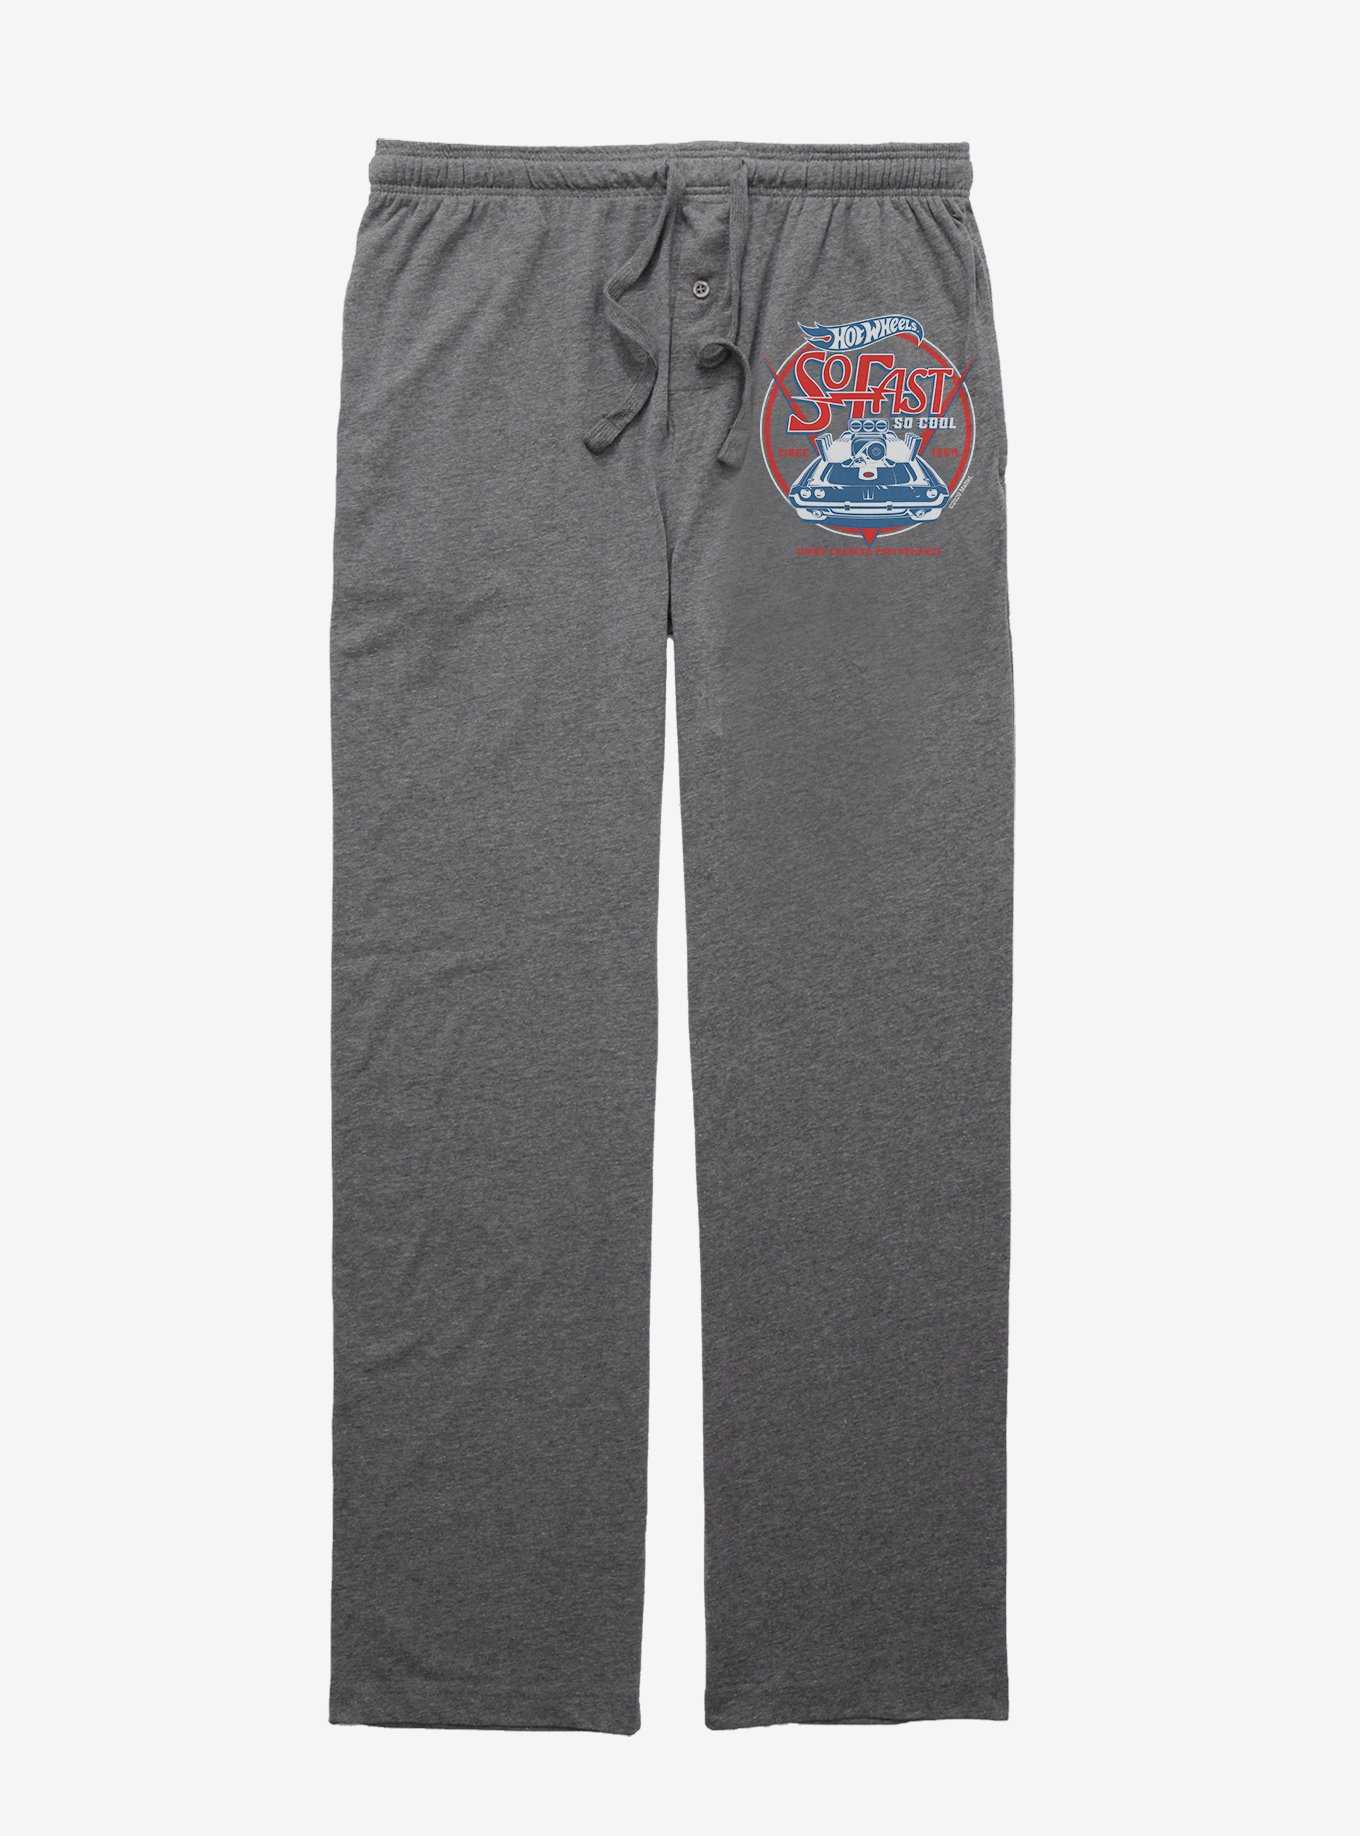 Colorado Avalanche Pants, Avalanche Leggings, Joggers, Pajama Bottoms